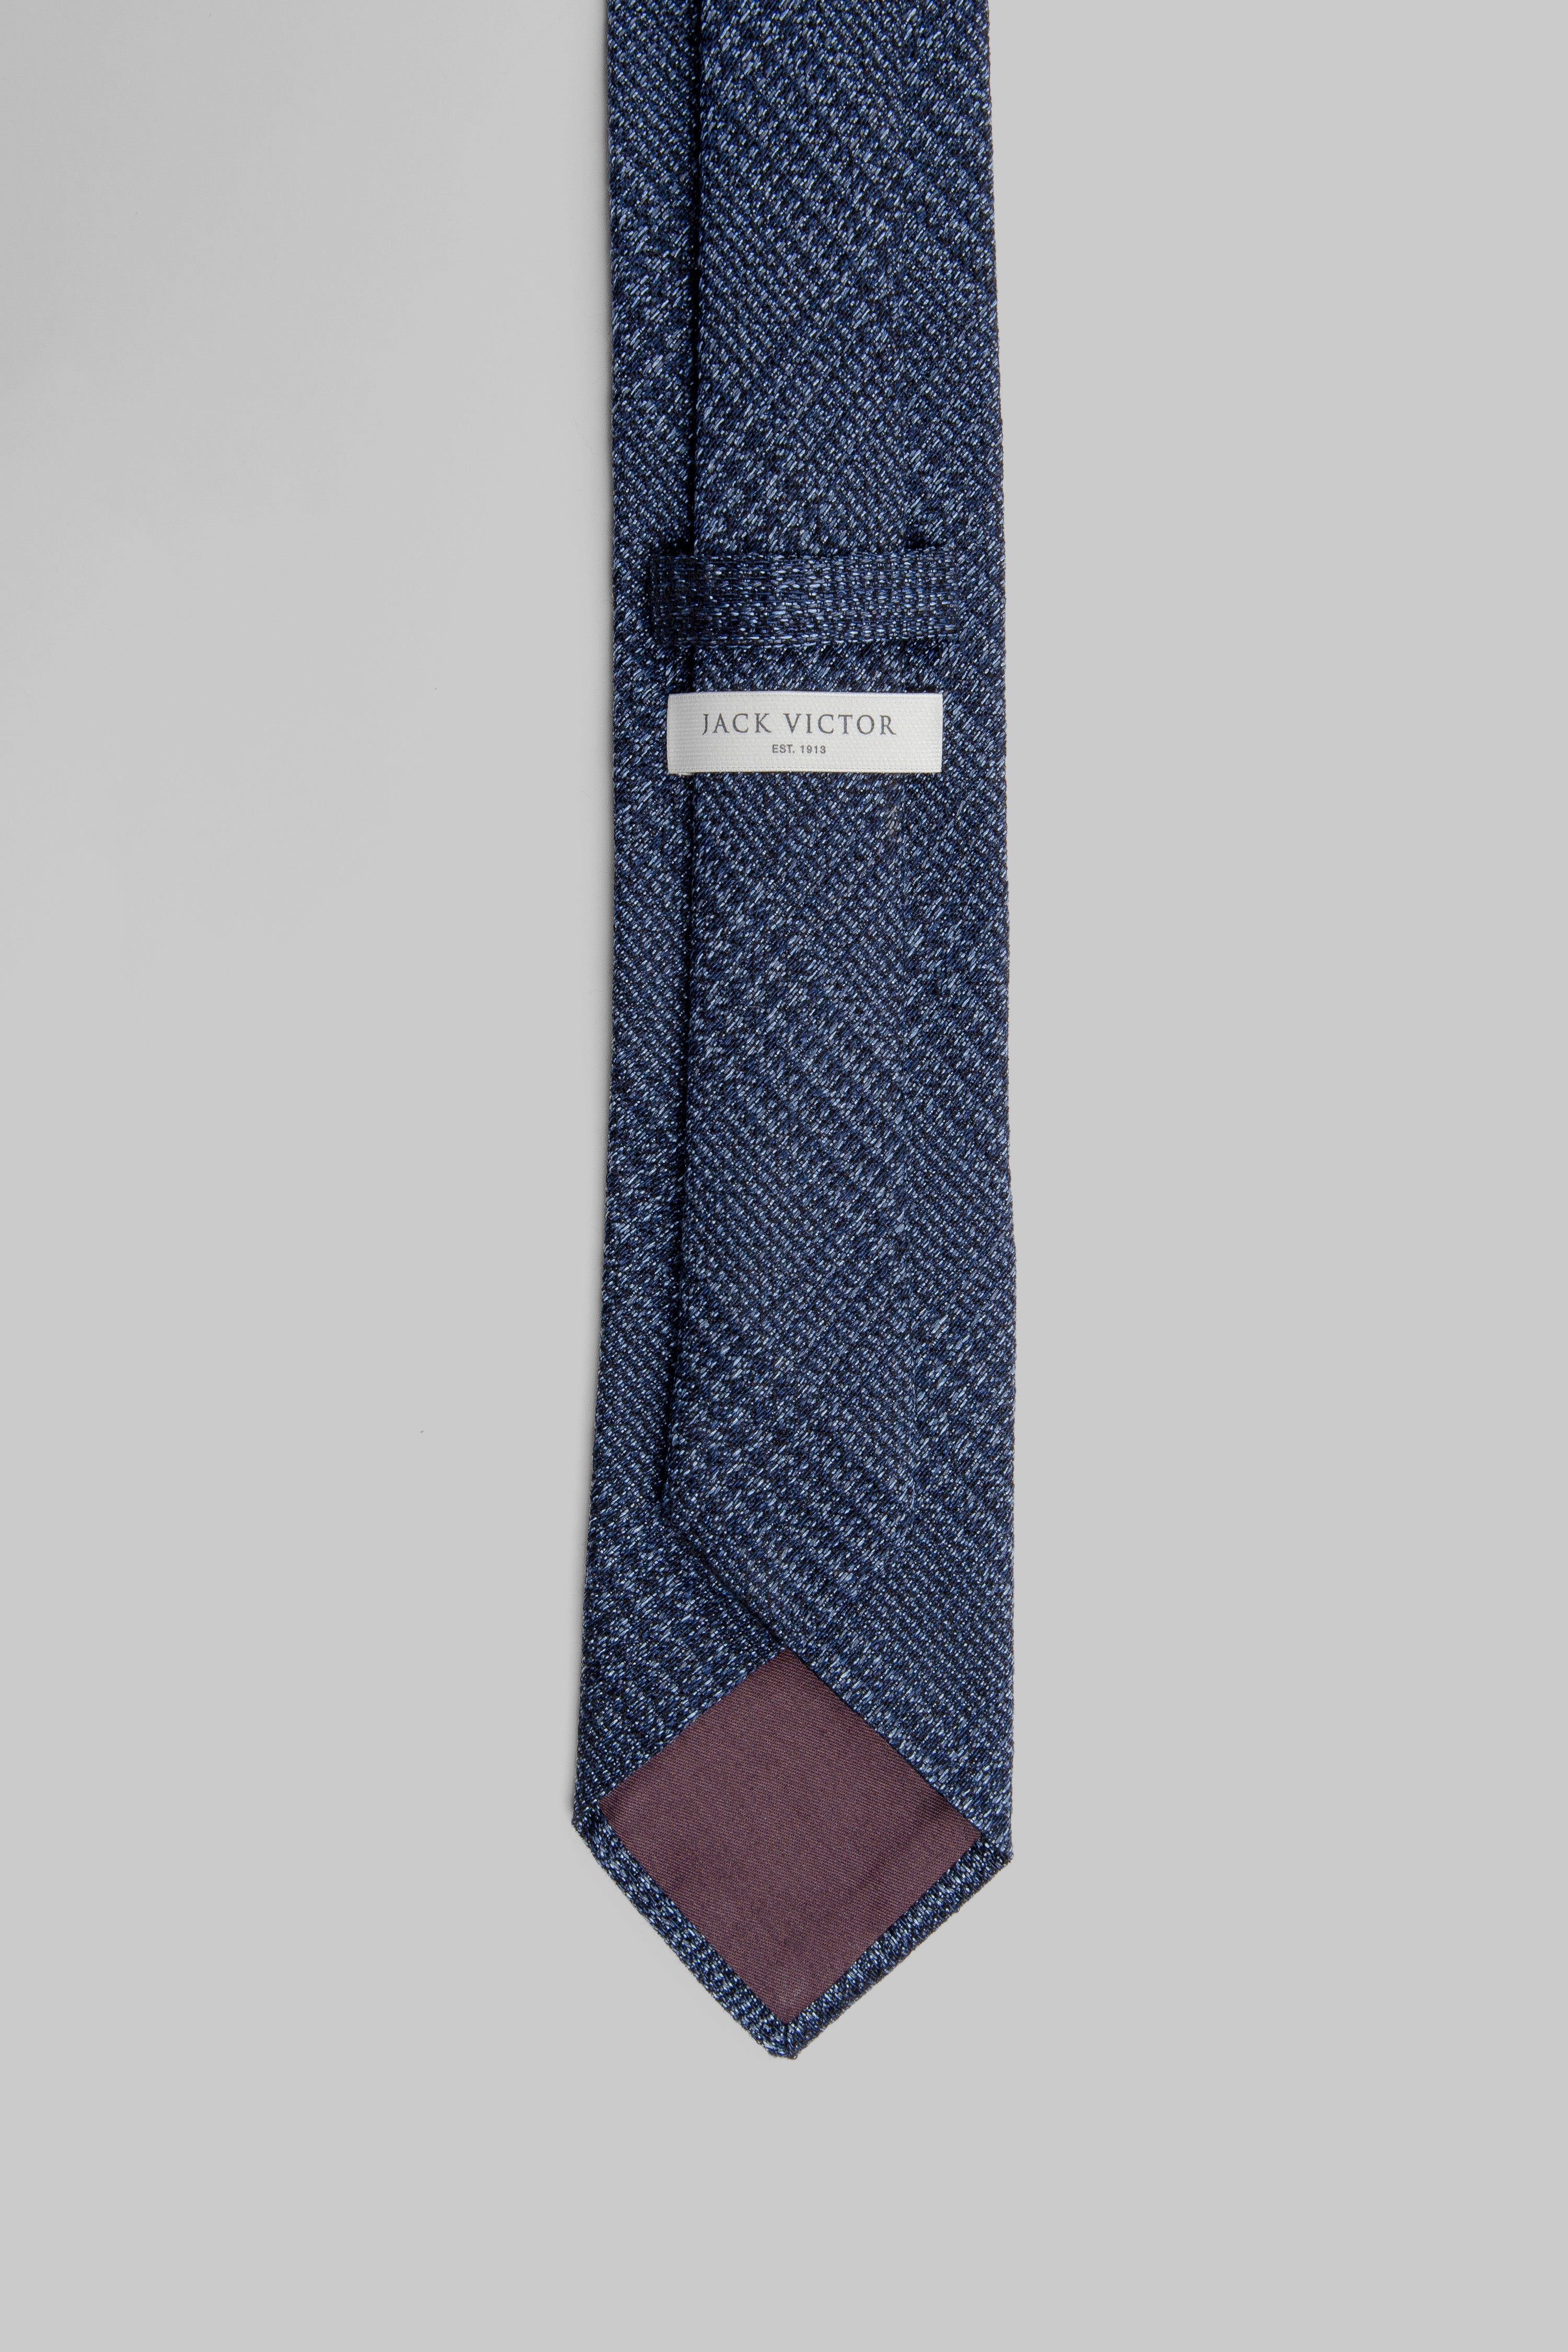 Vue alternative 2 Cravate Tissée Prince de Galles Bleu Marine